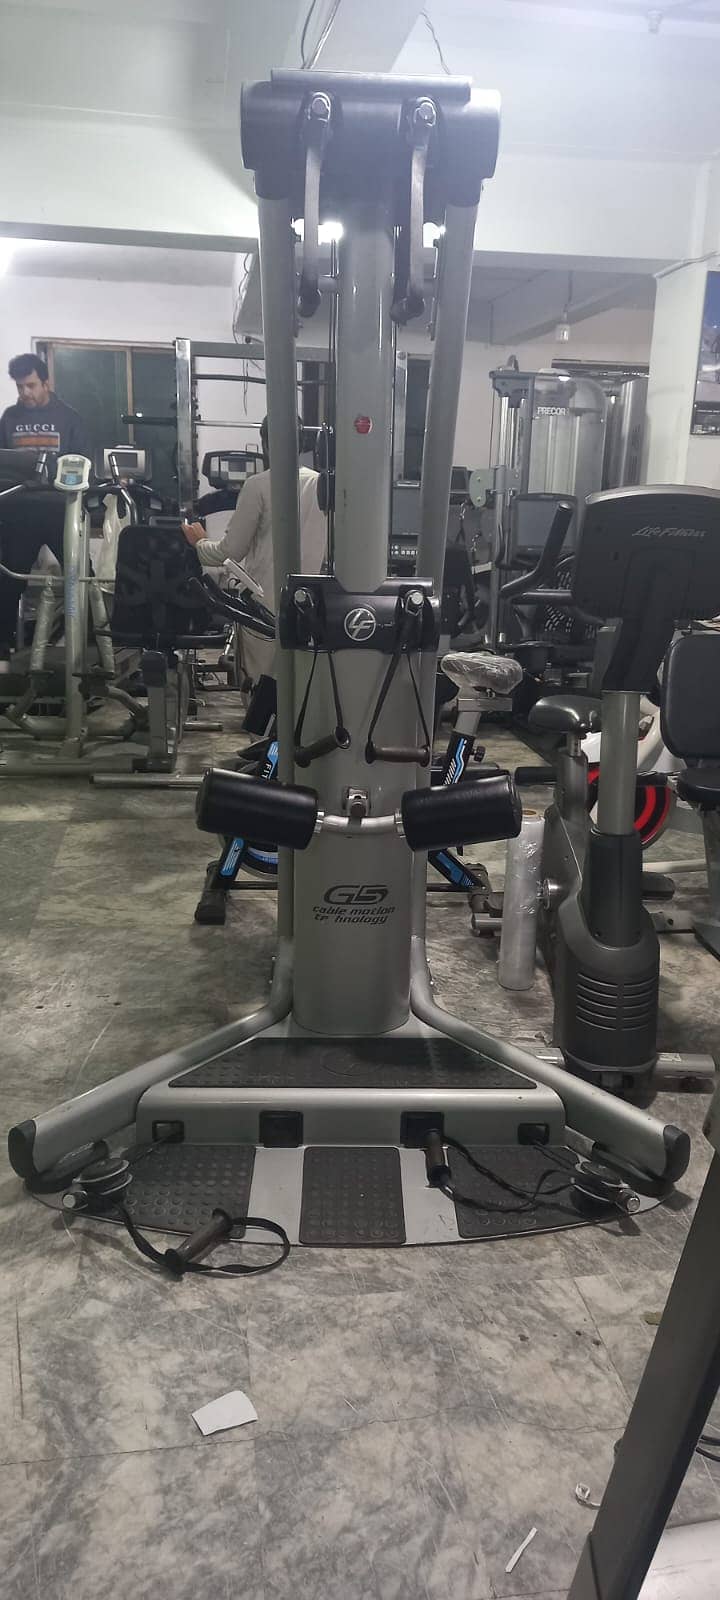 Power Rack Smith Trainer functional gym setup dumbbell treadmill plate 1